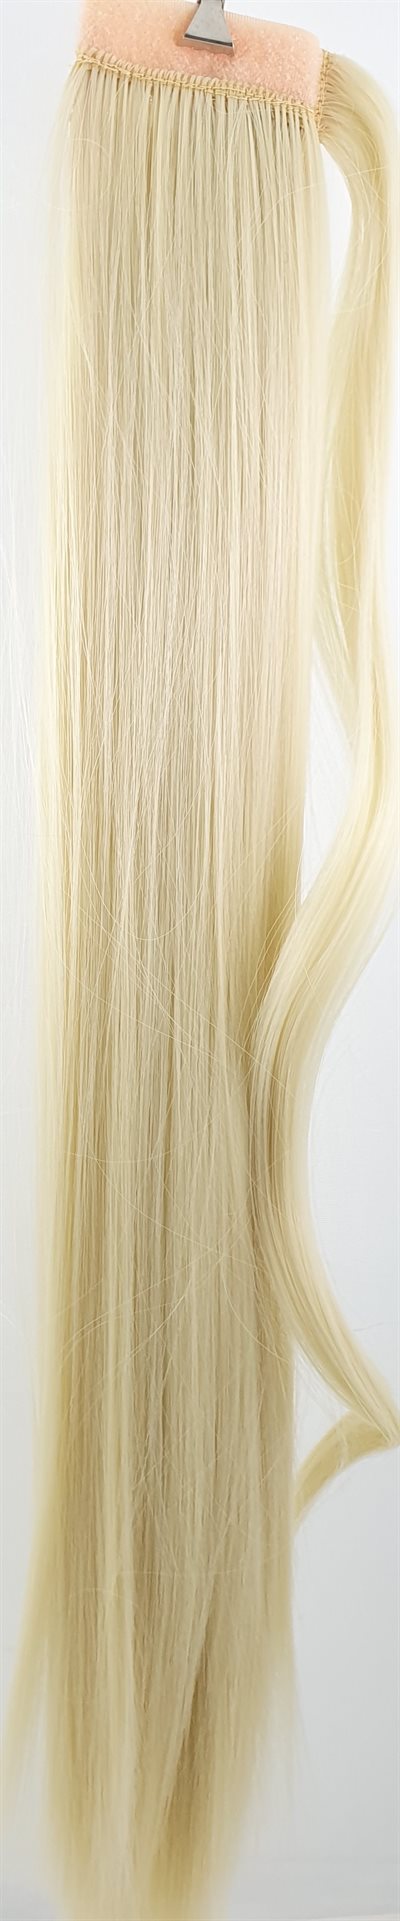 Hair Synthetic Ponytail 75 Cm Length -  Colour 613